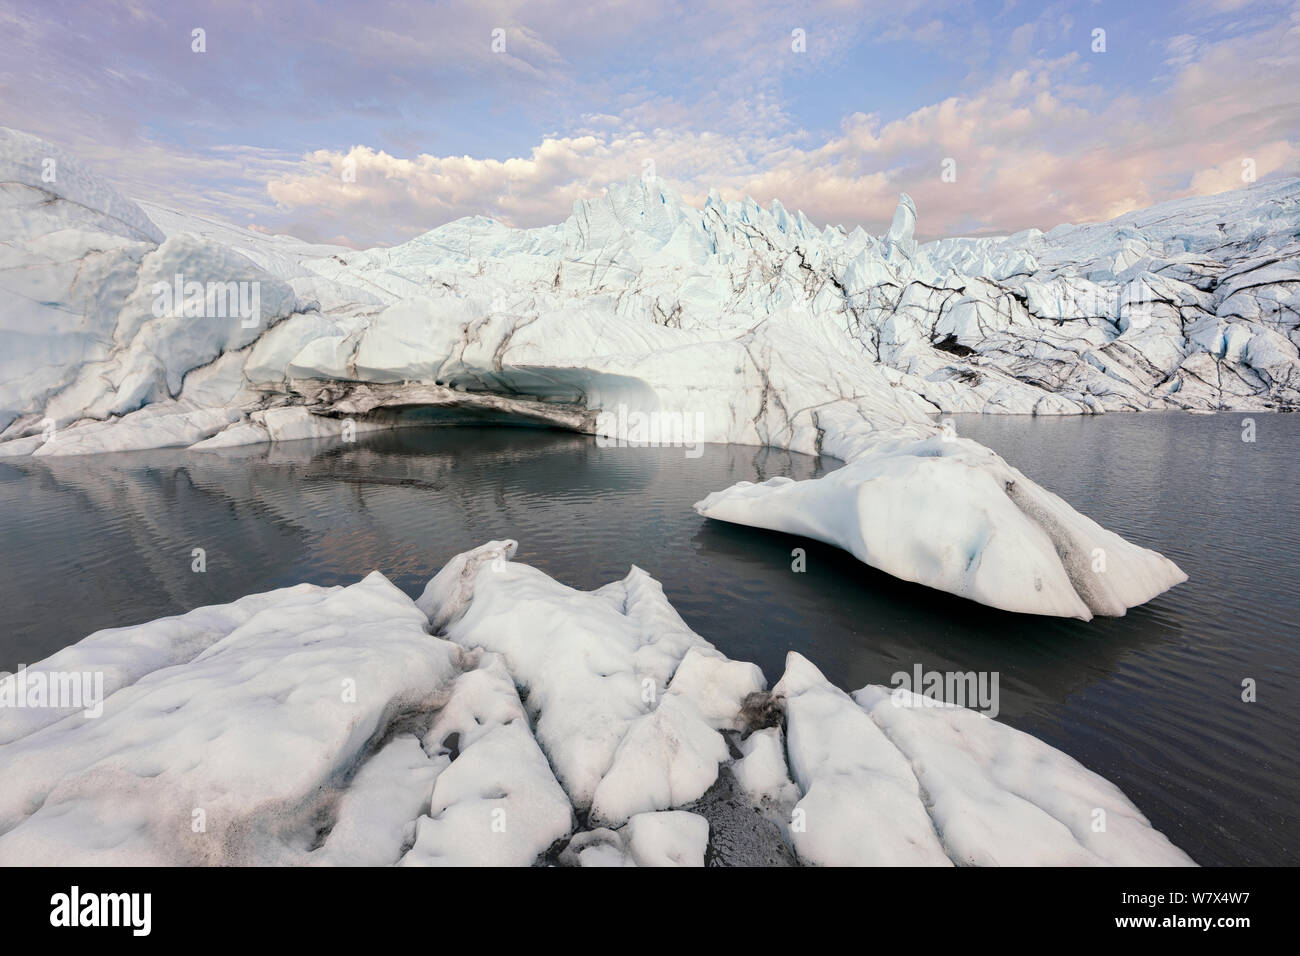 Matanuska Glacier, Alaska, USA. June 2013. Stock Photo